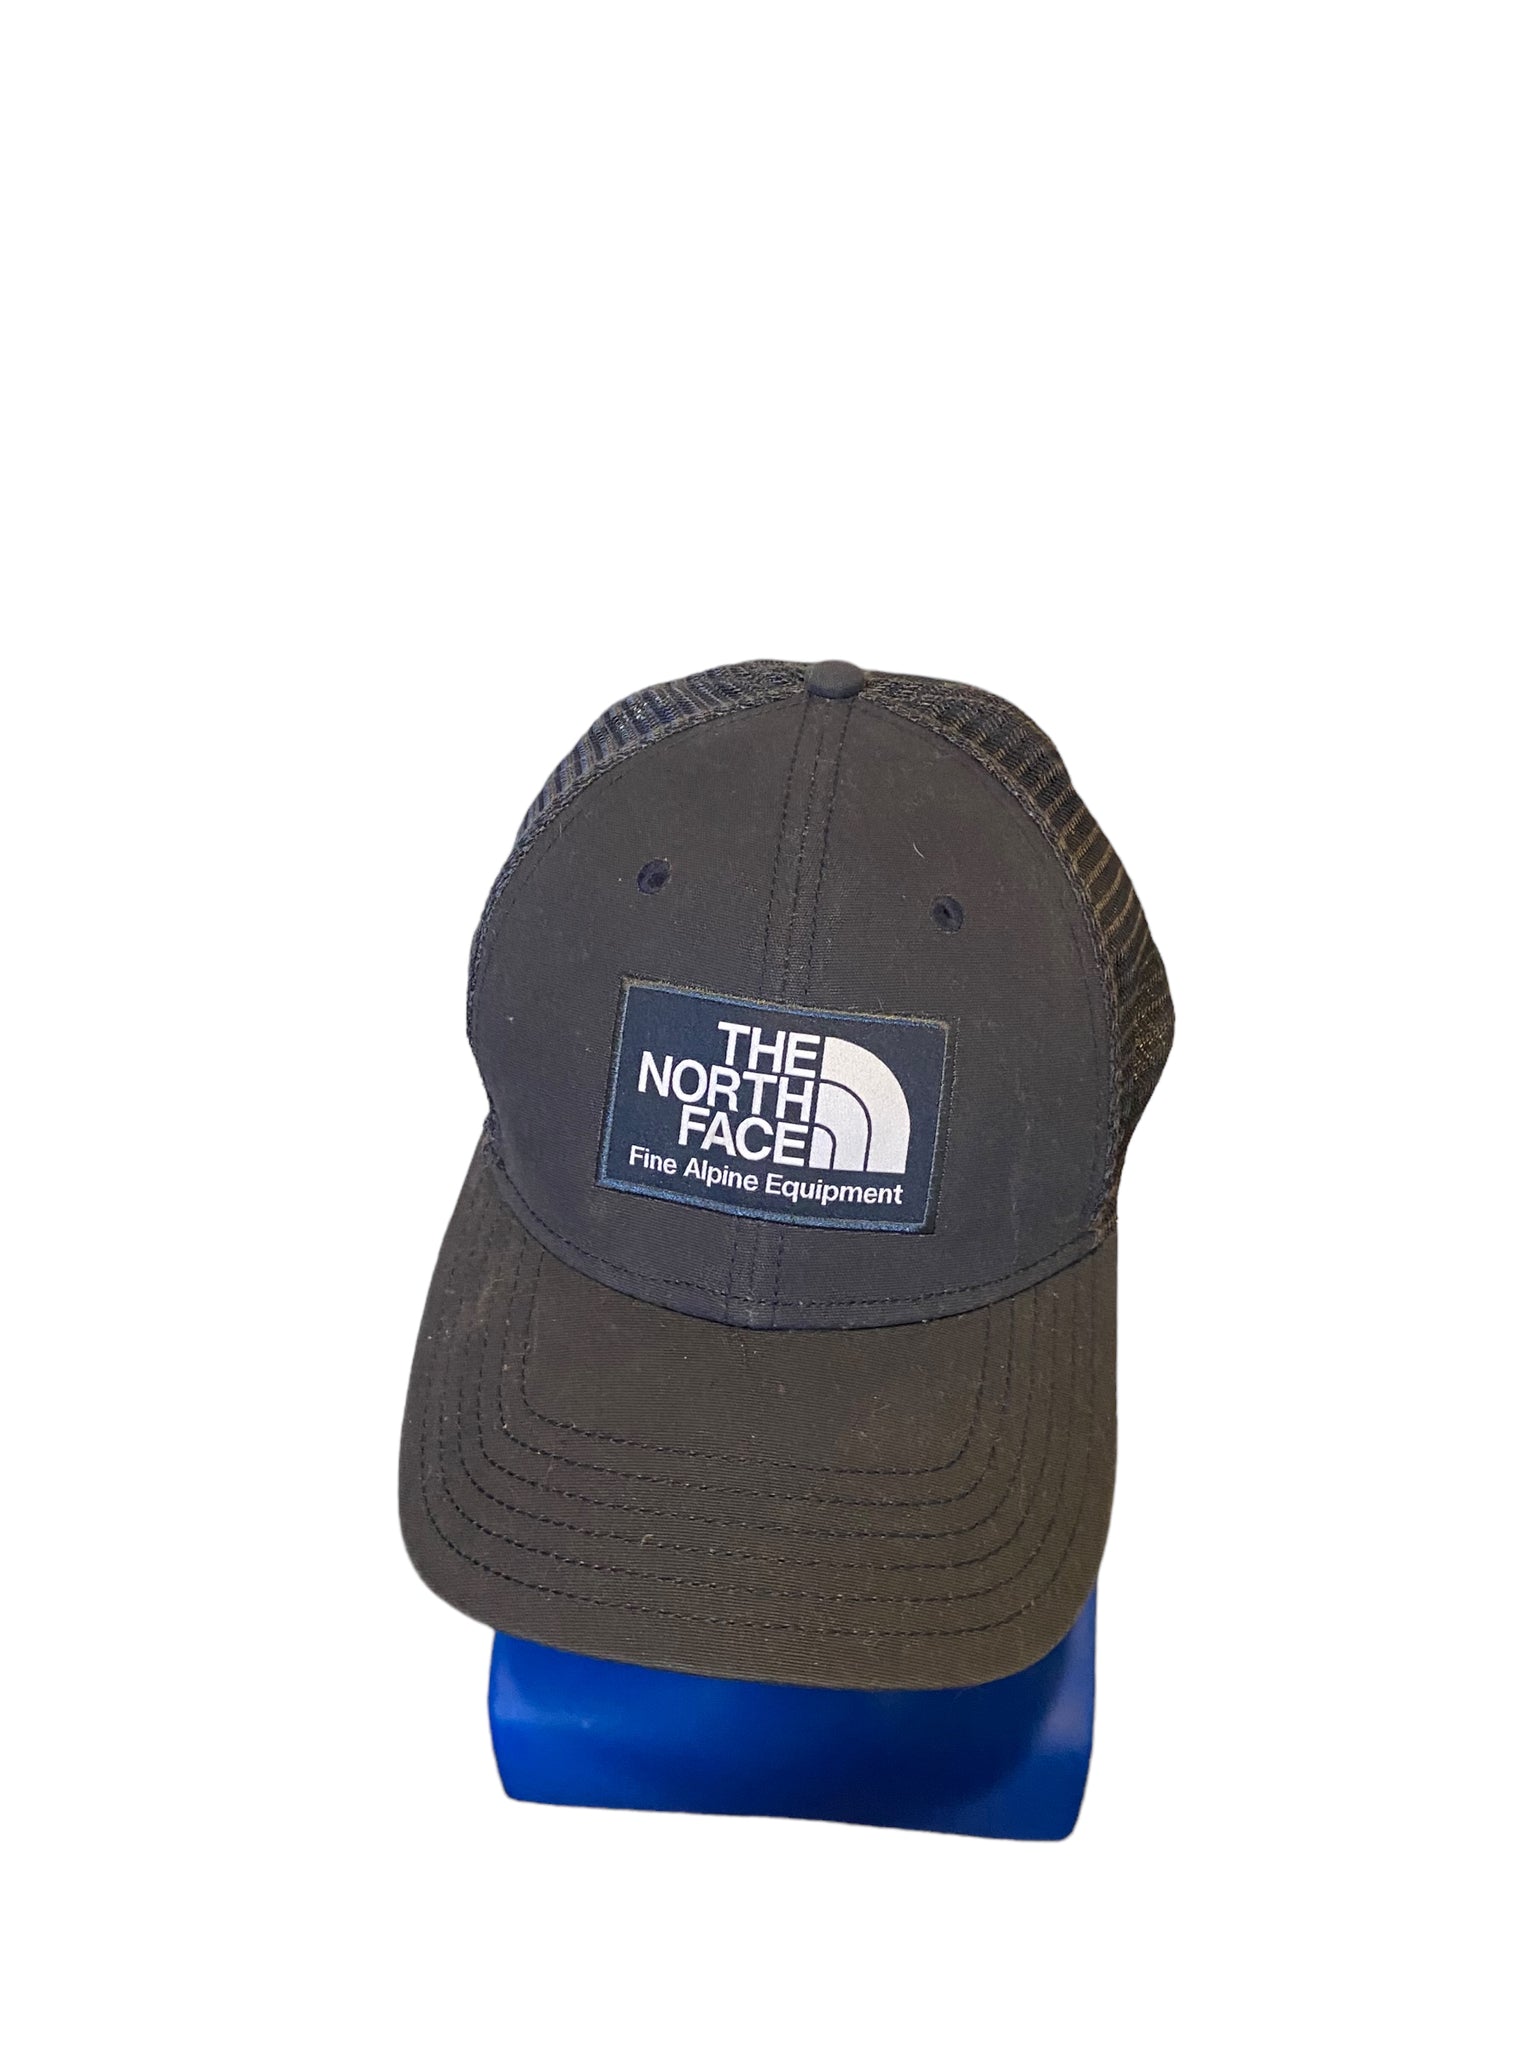 the north face fine alpine equipment patch snapback trucker dark blue hat